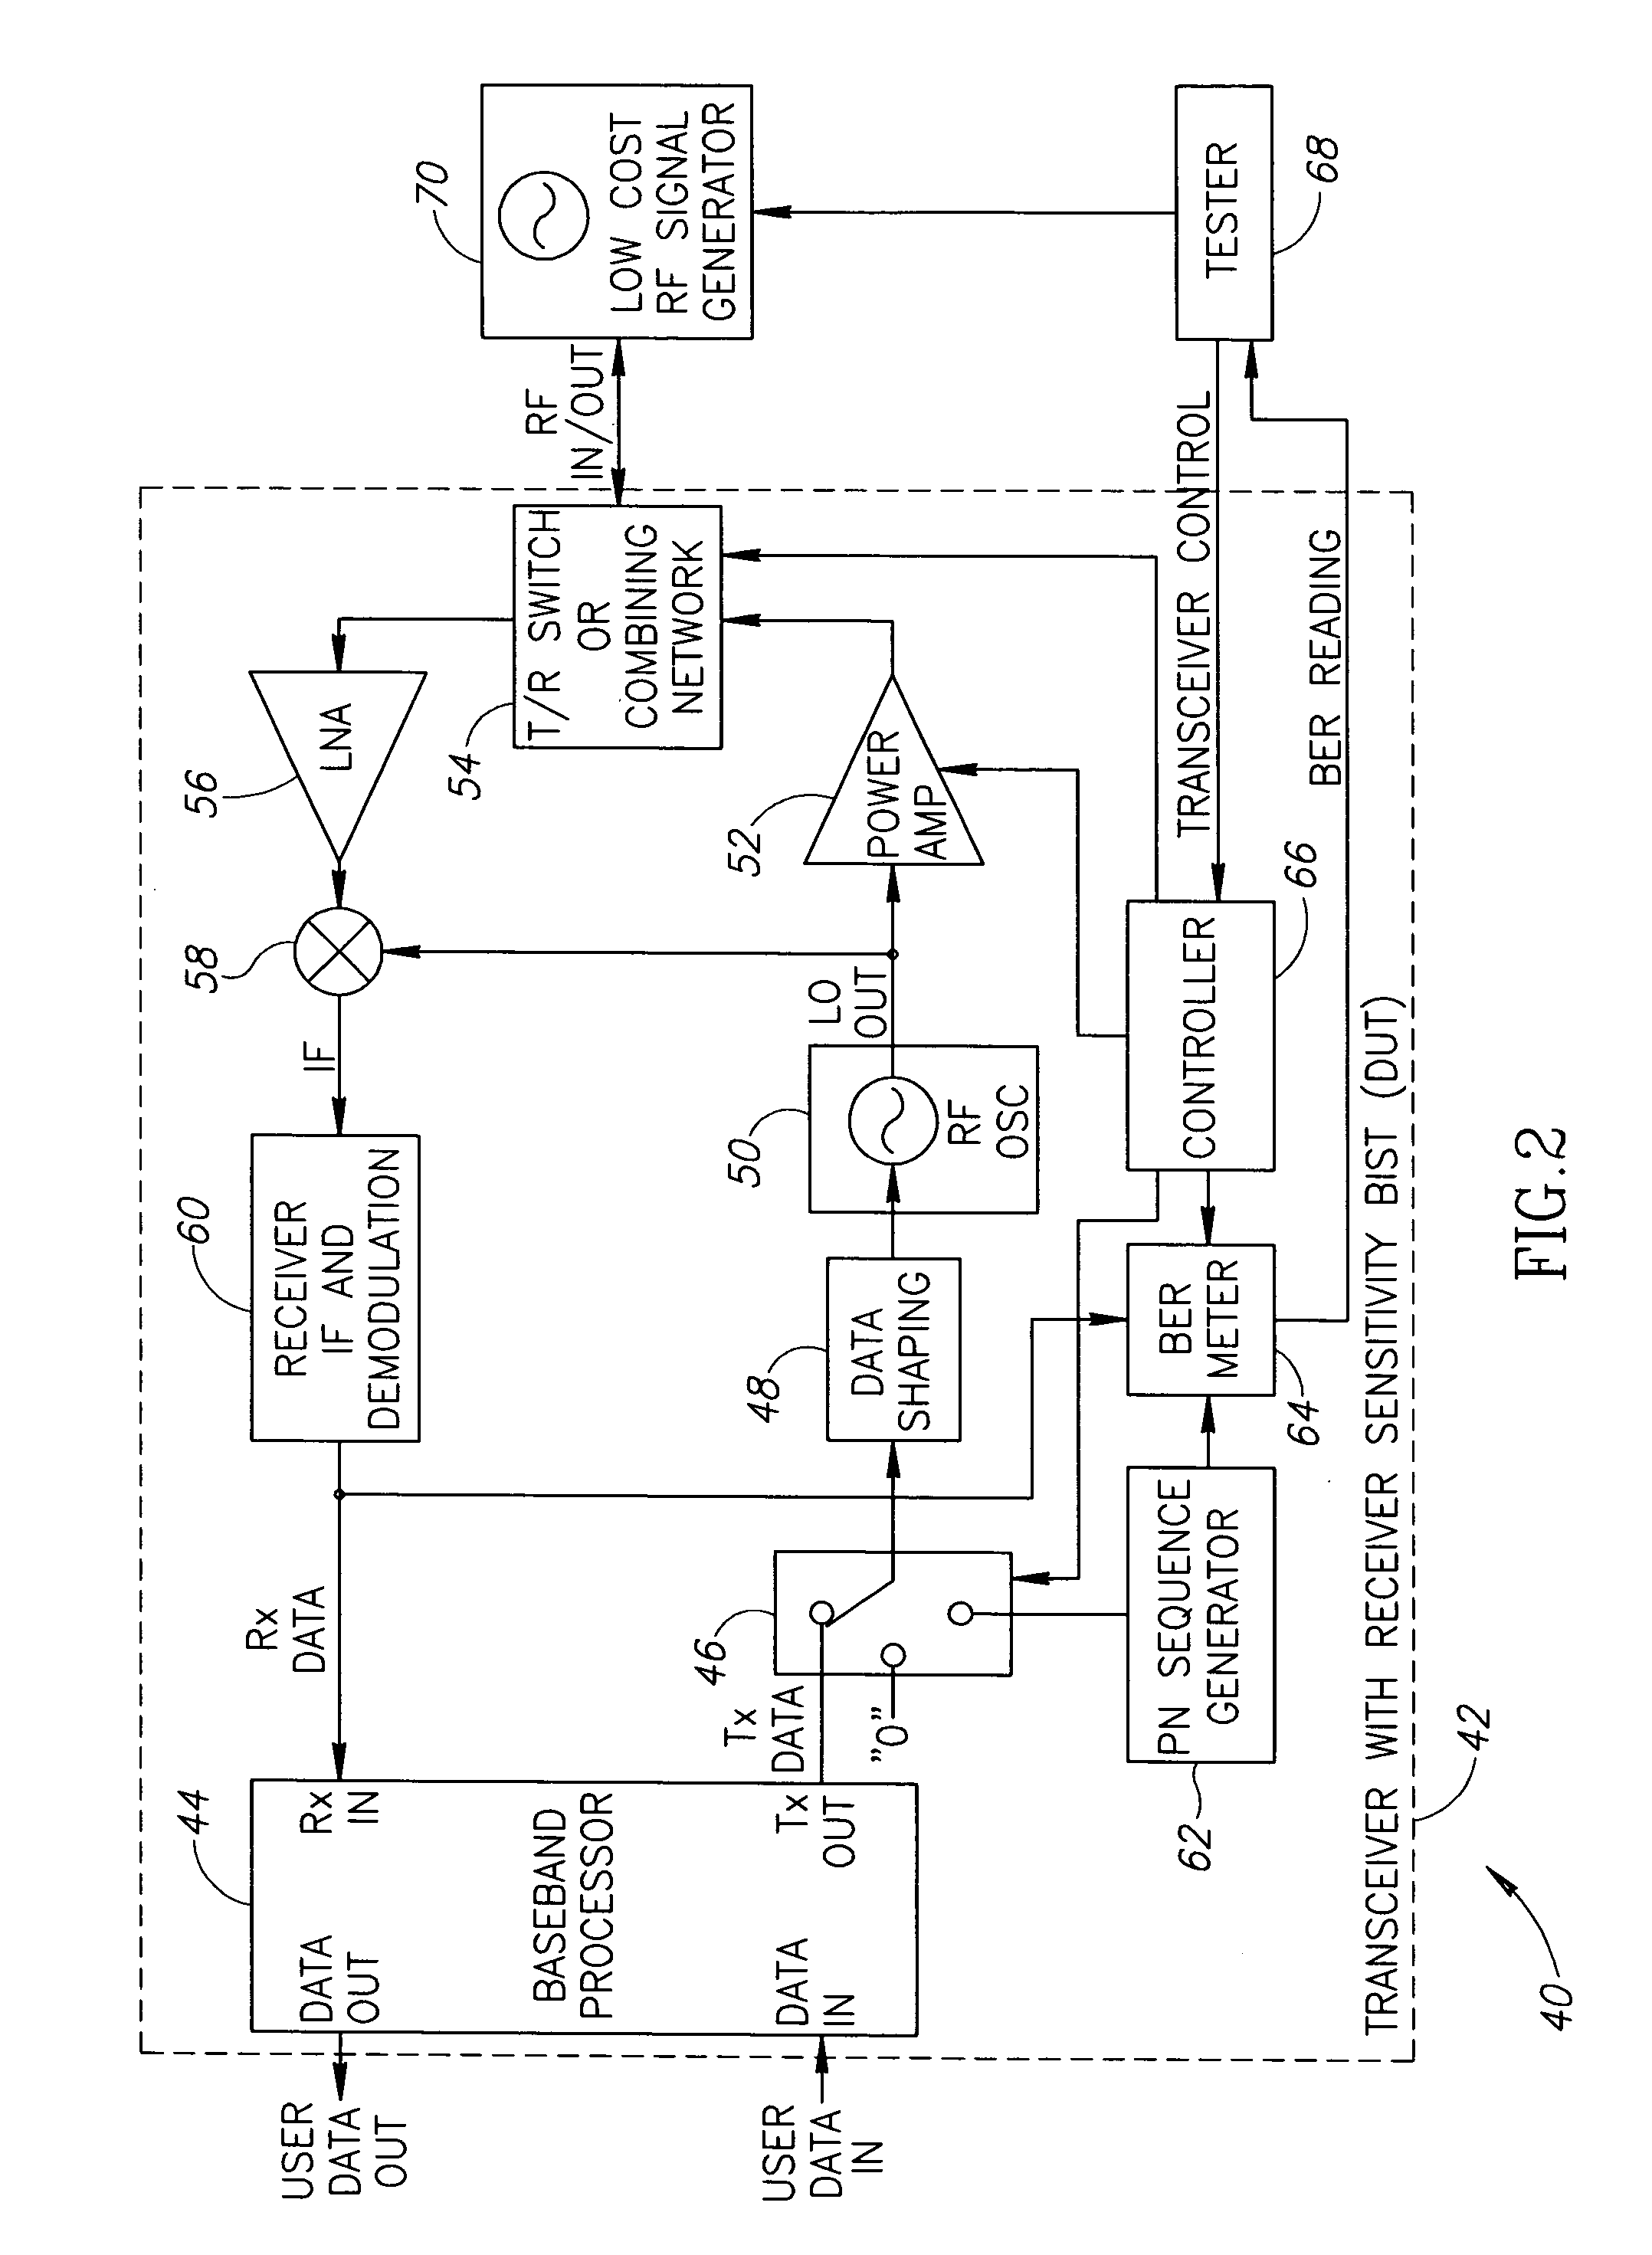 On-chip receiver sensitivity test mechanism